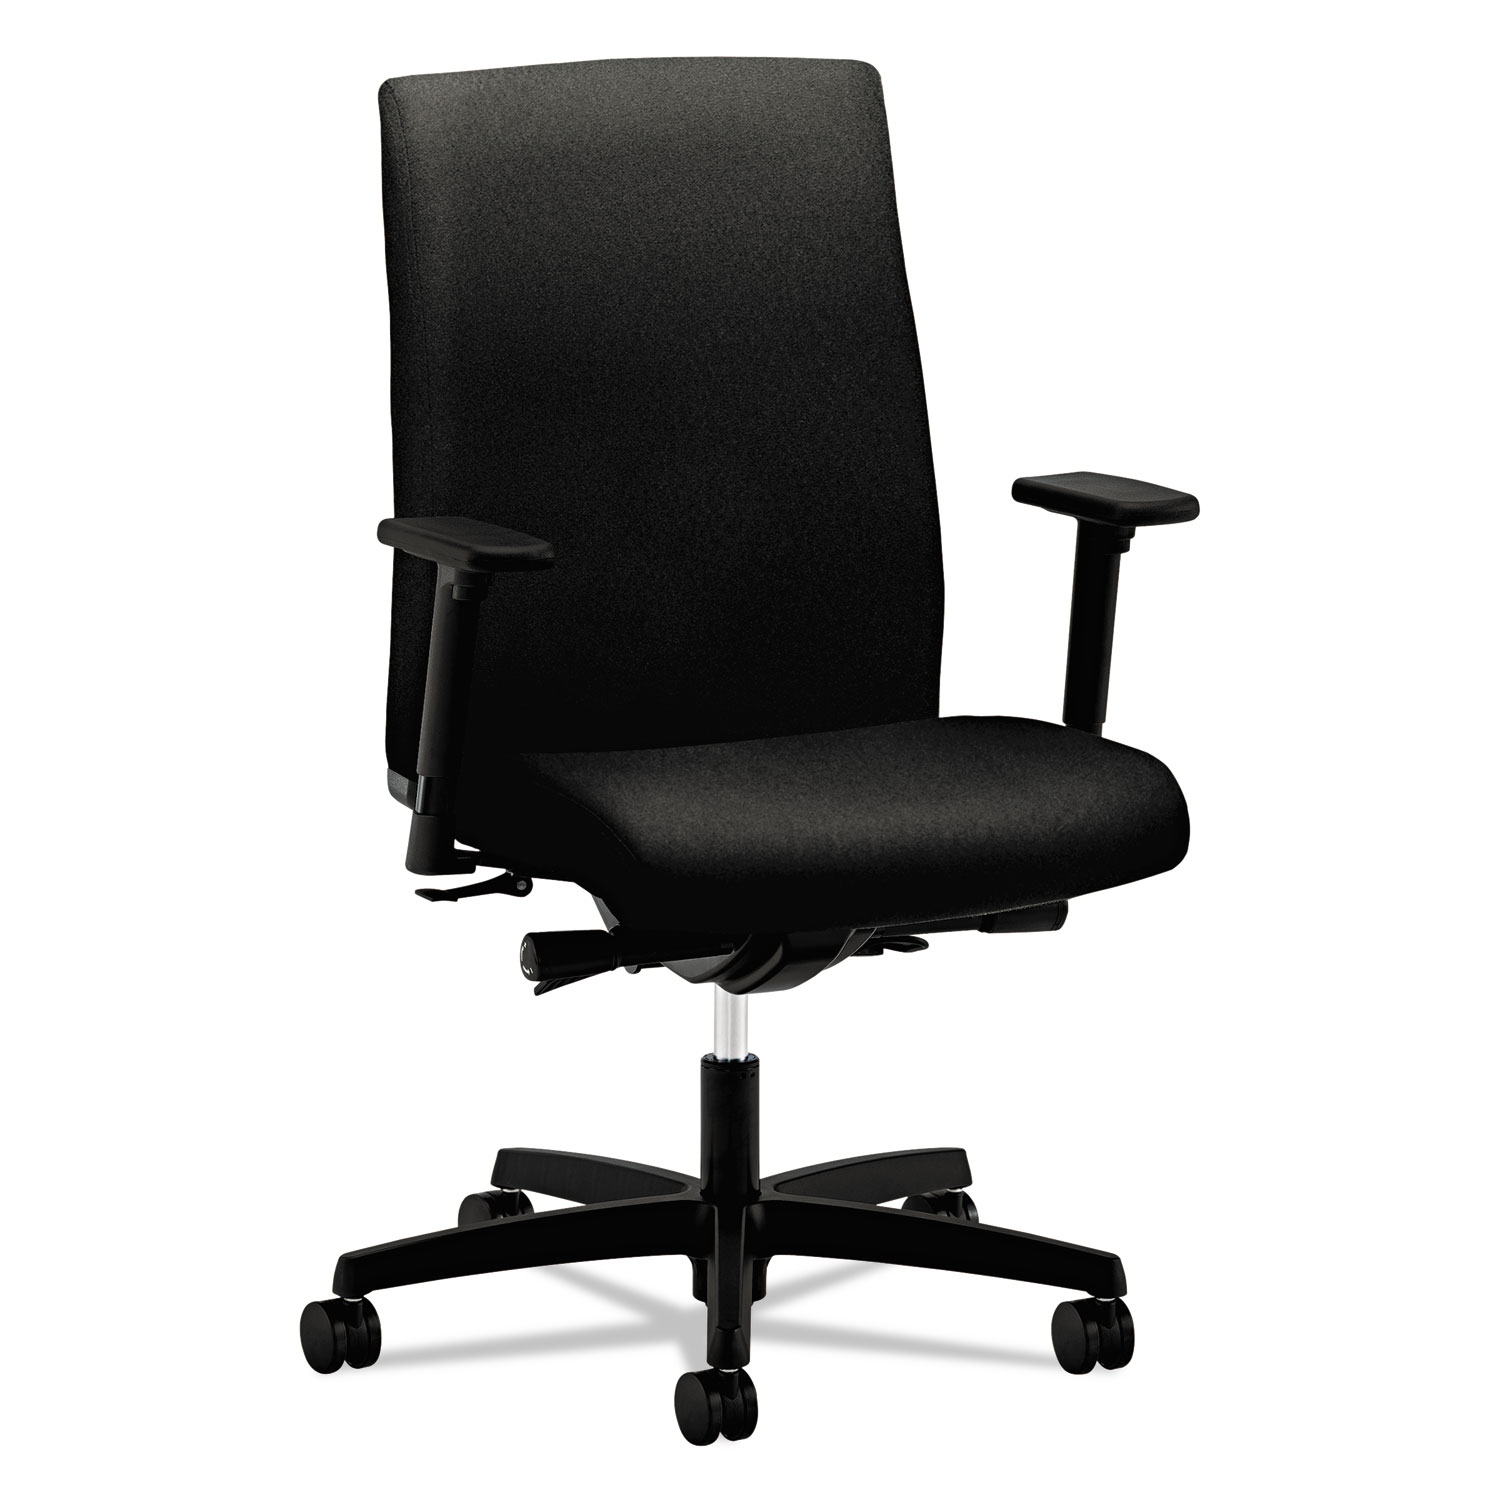  HON HIWM3.A.H.U.CU10.T.SB Ignition Series Mid-Back Work Chair, Supports up to 300 lbs., Black Seat/Black Back, Black Base (HONIW104CU10) 